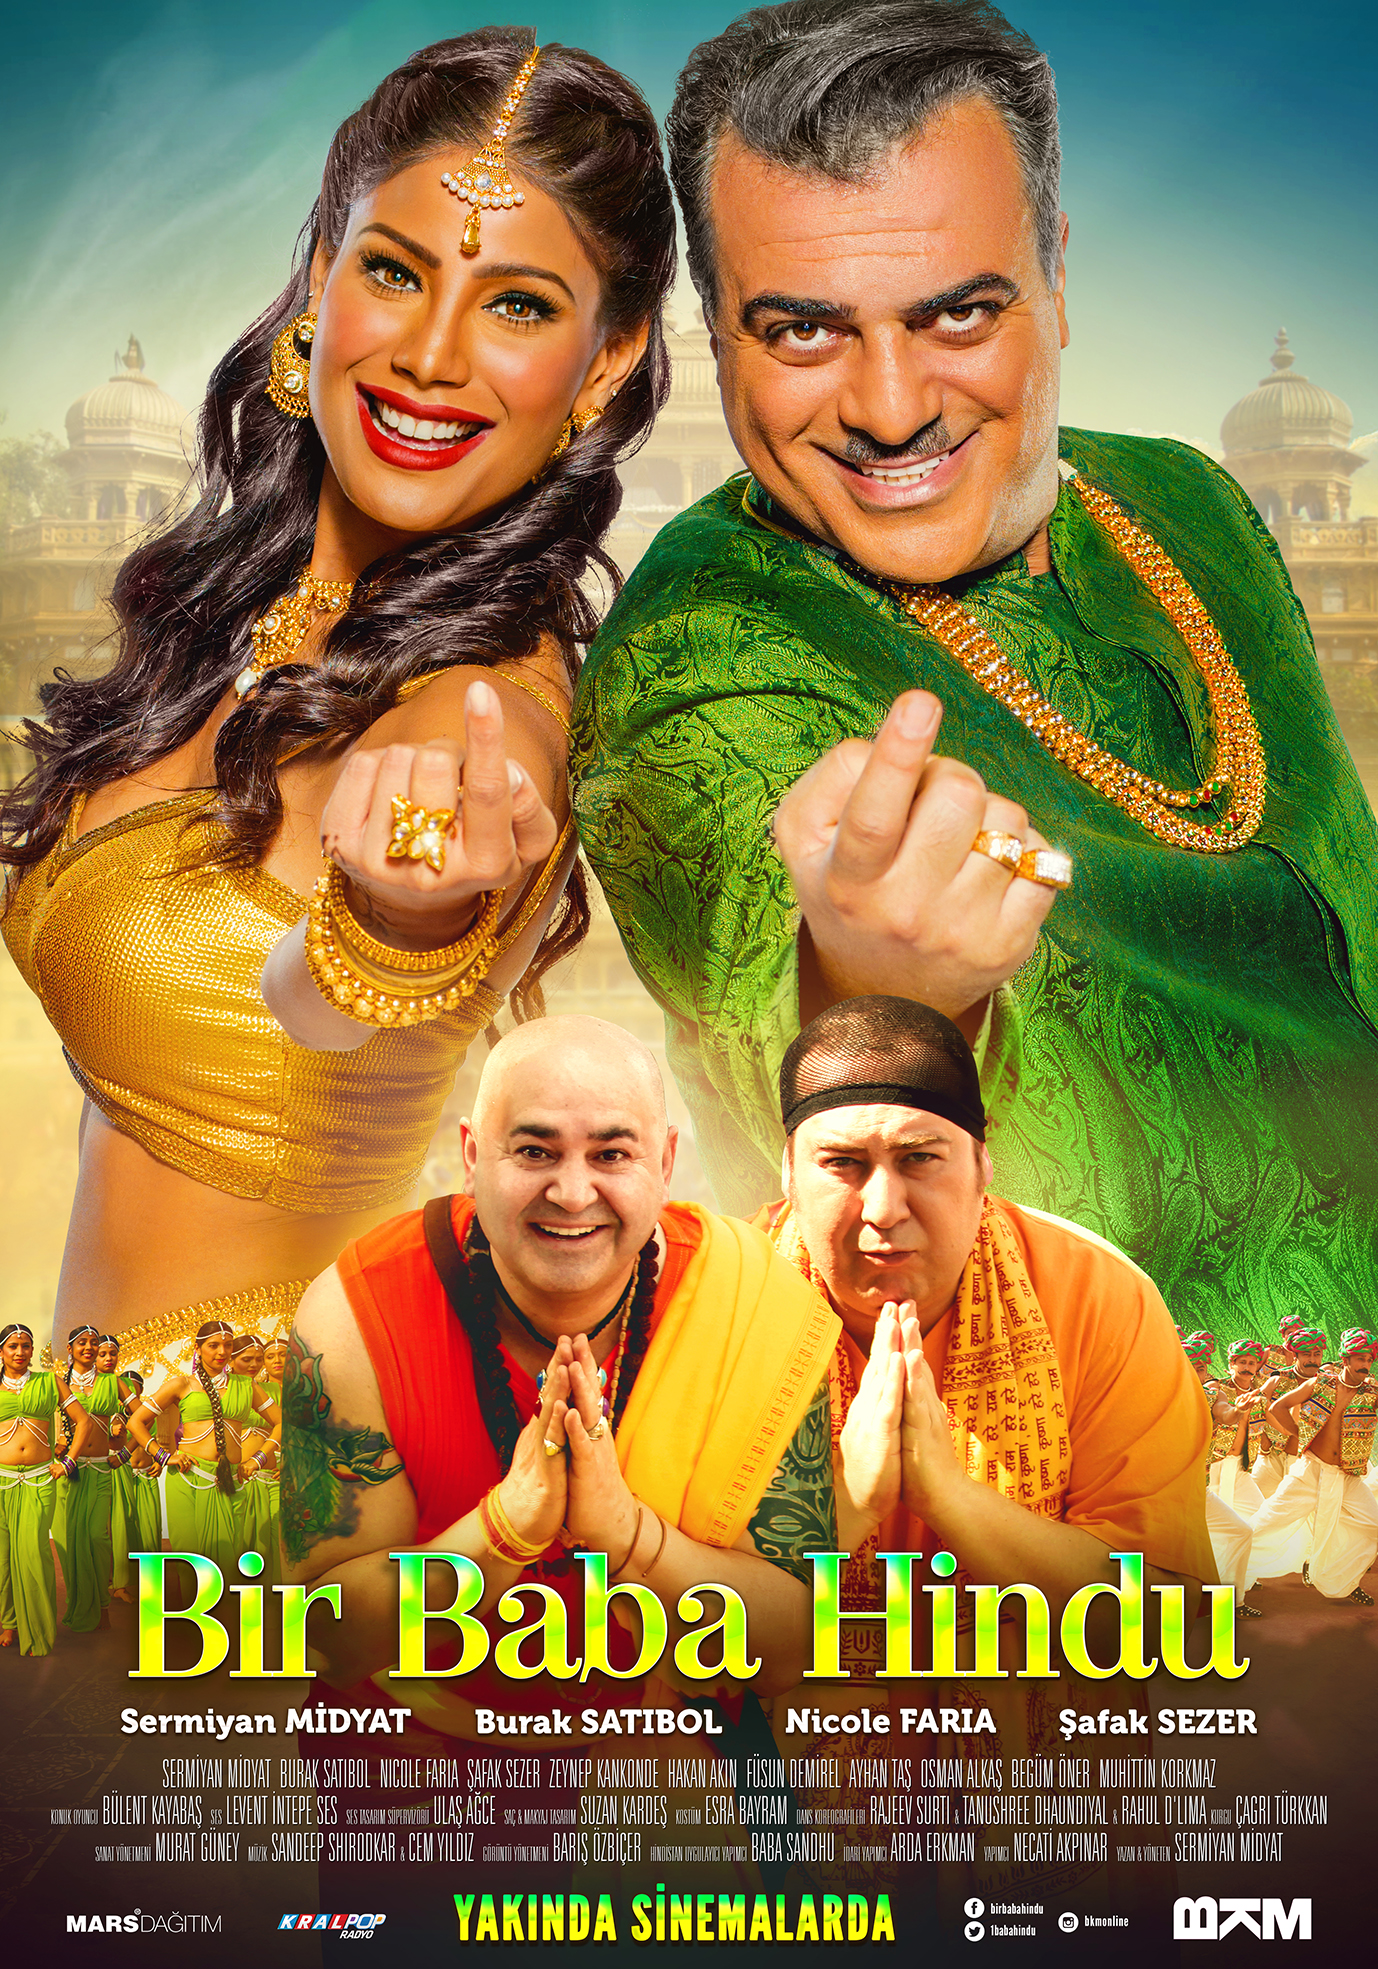 Bir Baba Hindu Main Poster